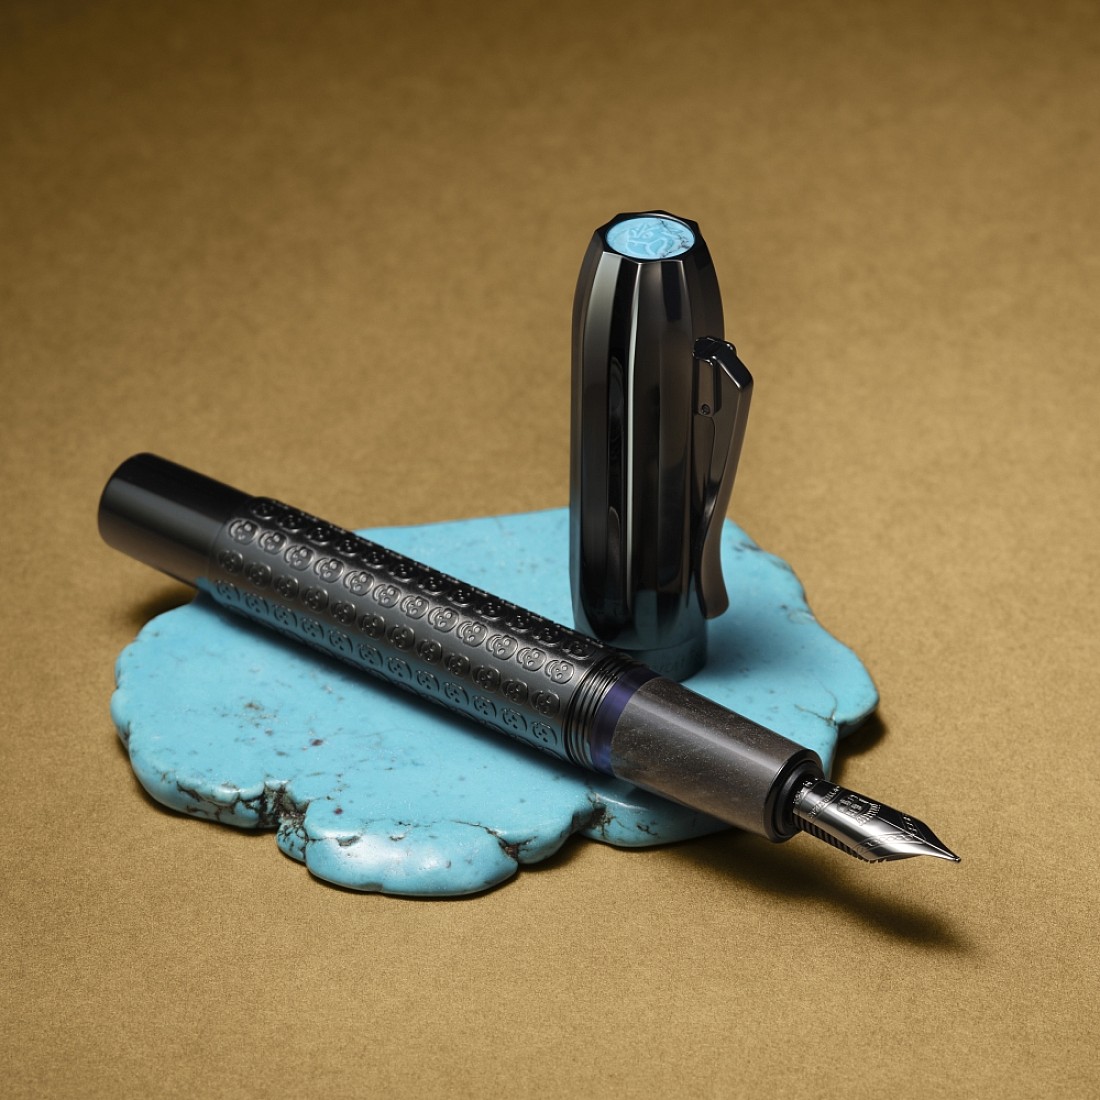 Graf von Faber-Castell Pen of The Year 2022 Aztecs Fountain pen